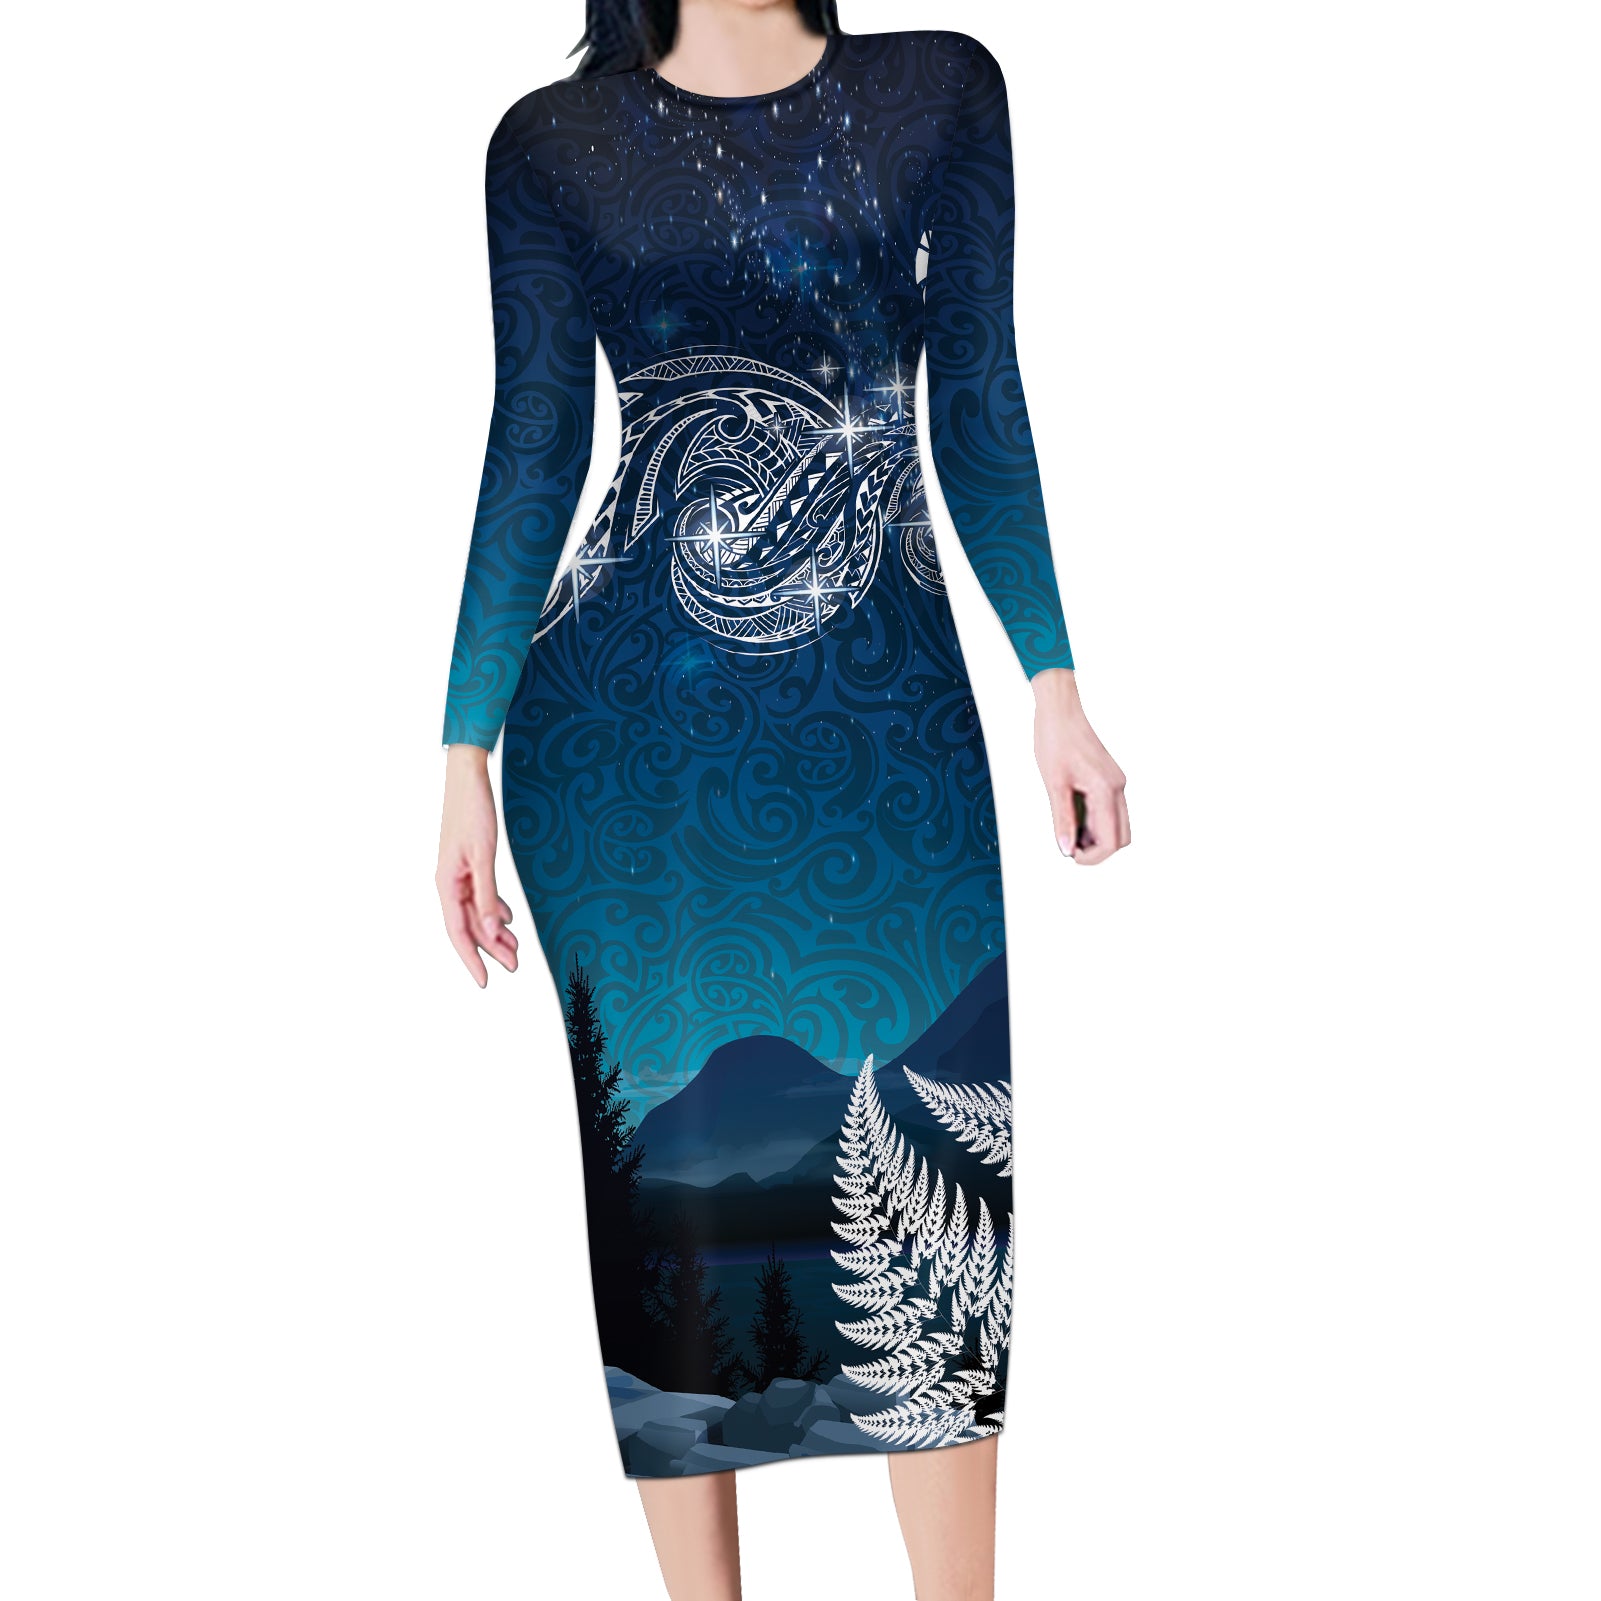 New Zealand Matariki Long Sleeve Bodycon Dress Starry Night Style